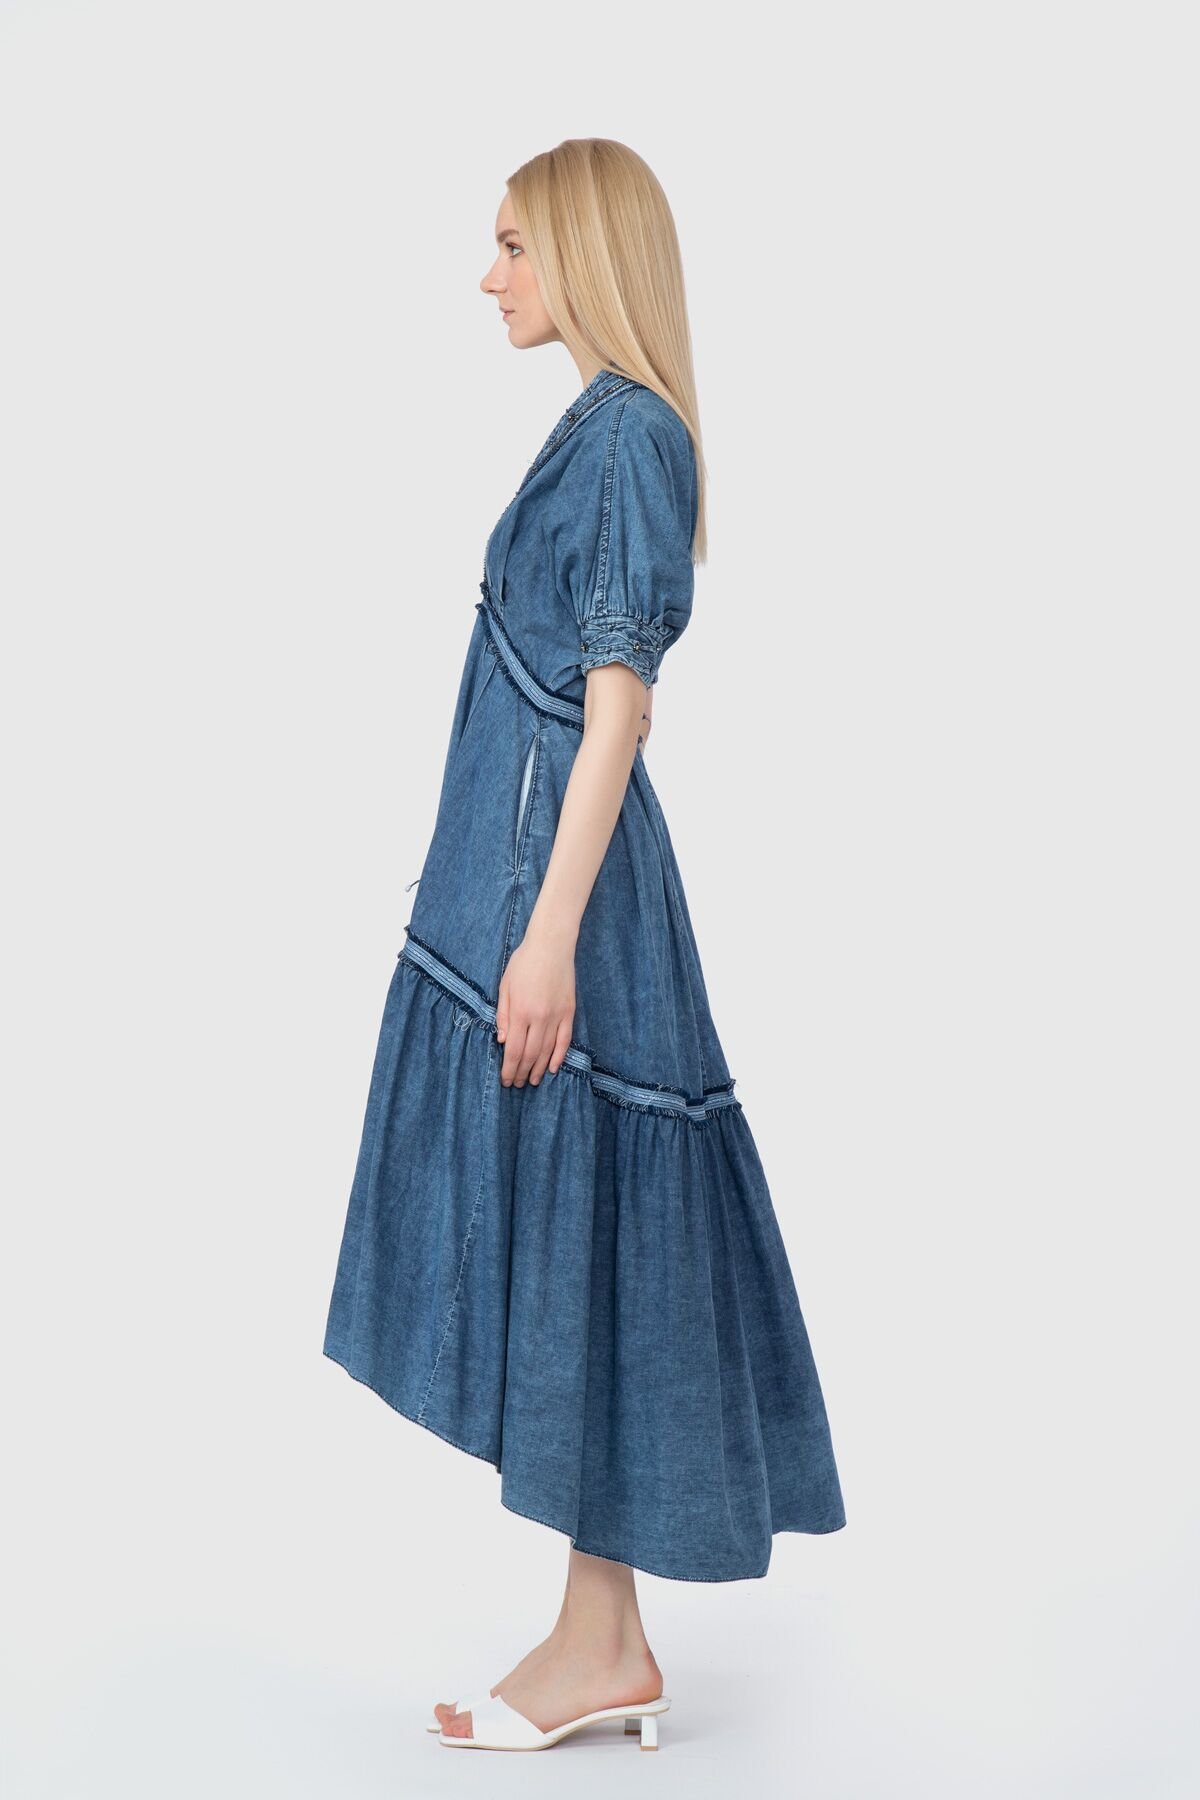 Stitching Detailed V-Neck Pleated Midi Length Blue Jean Dress